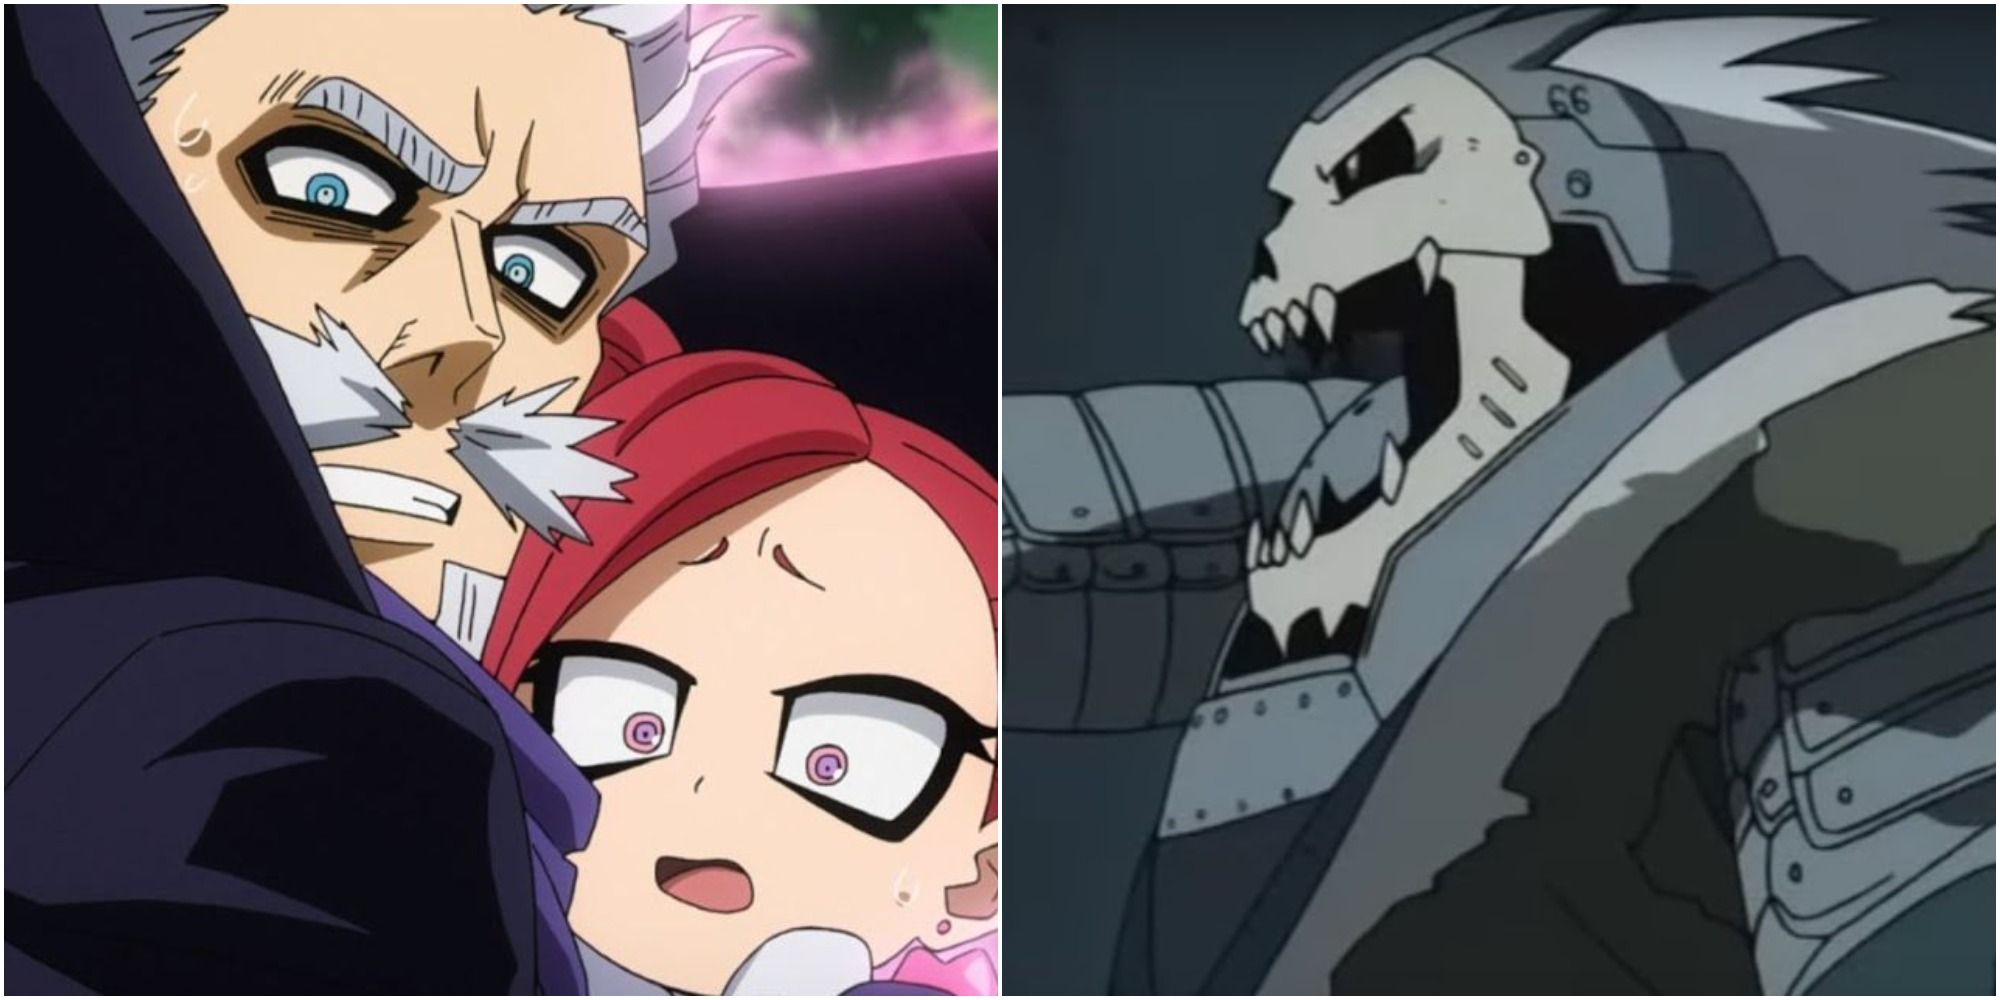 Funniest villains in shonen anime